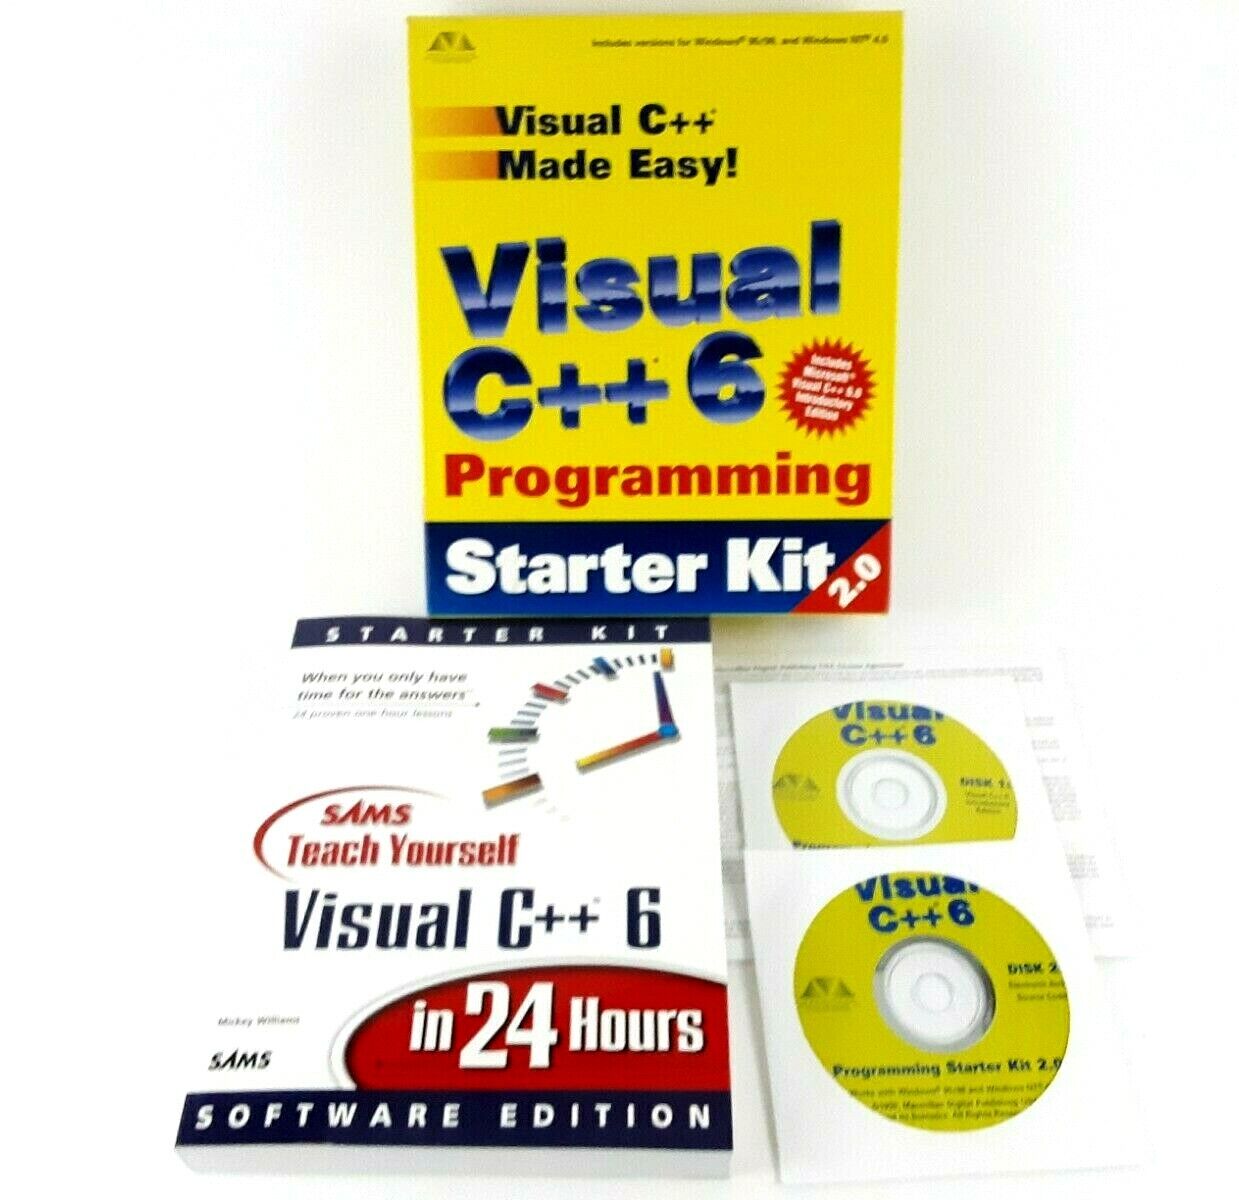 Vintage Visual C++6 Programming Starter kit  2.0 for Windows 95/98 and NT 4.0